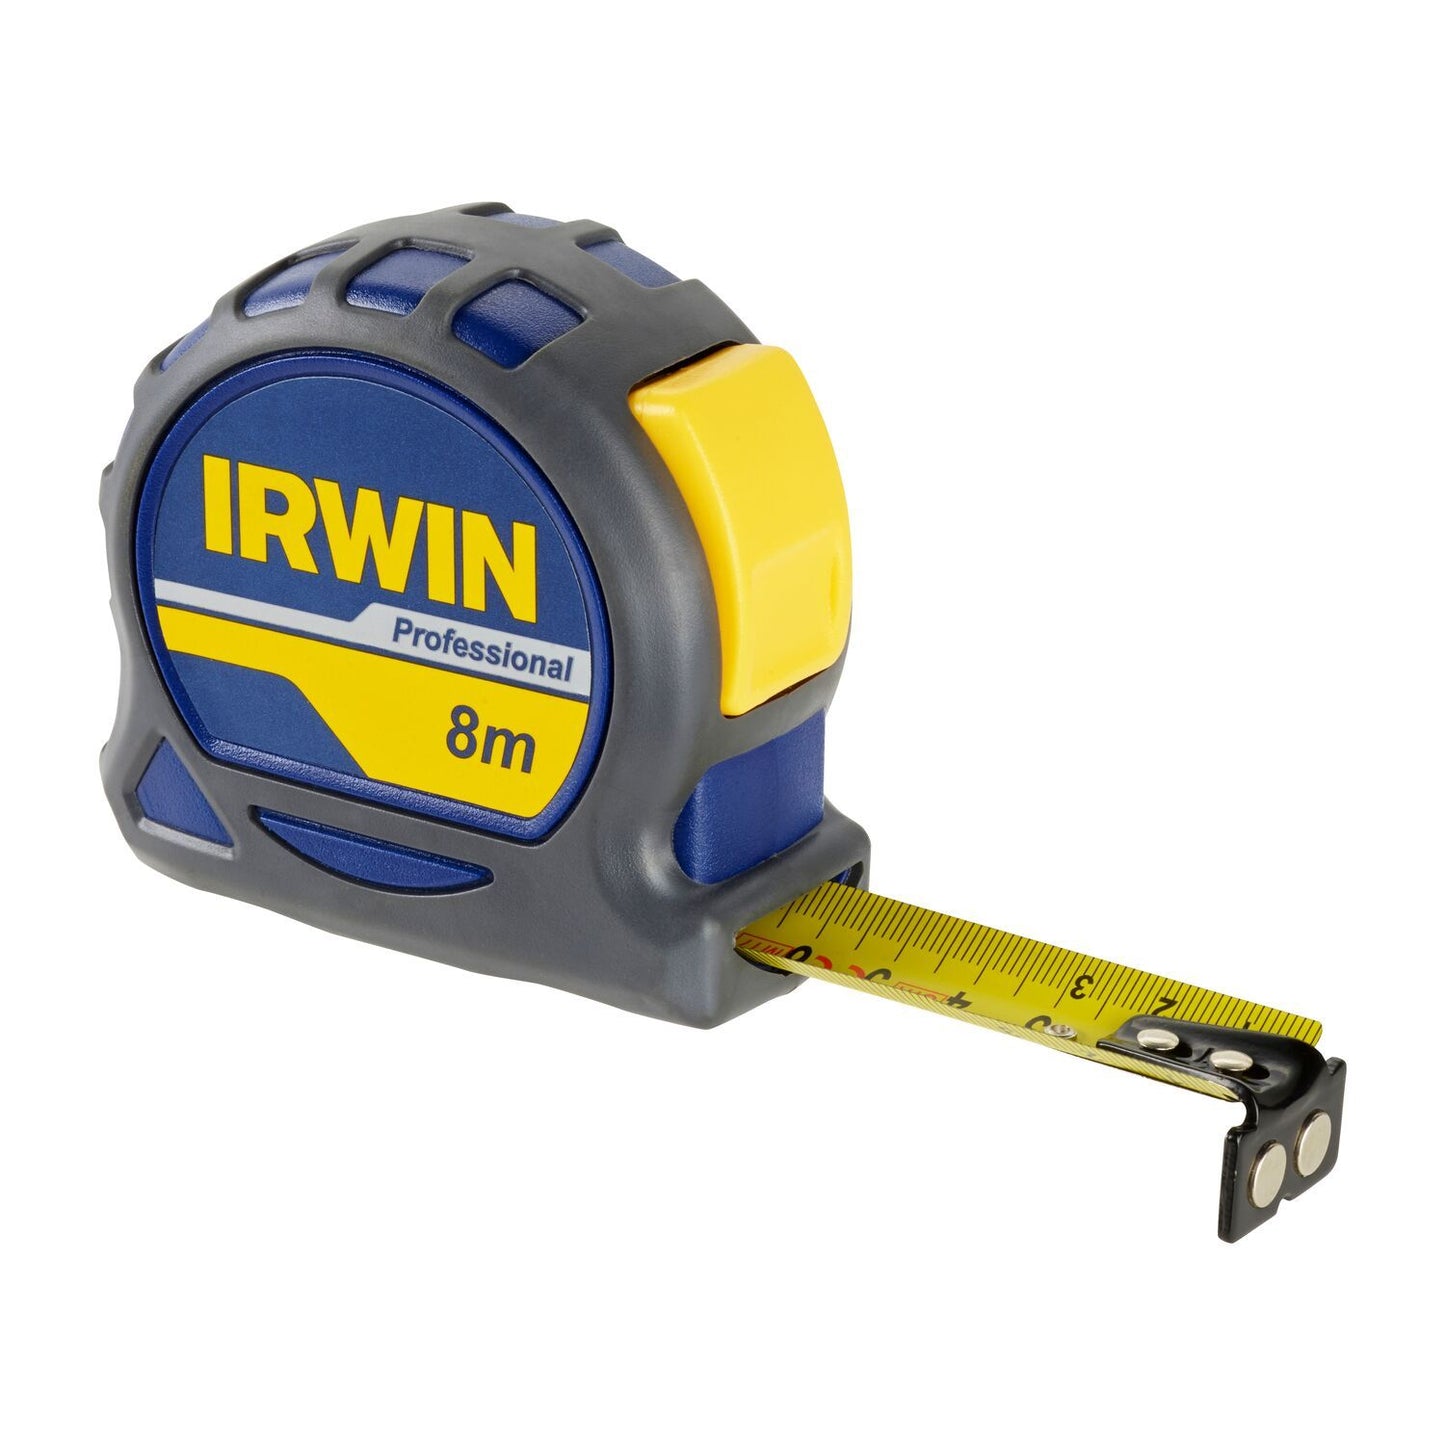 Irwin Professioneel 8m/24"" rolmeter - 10507795